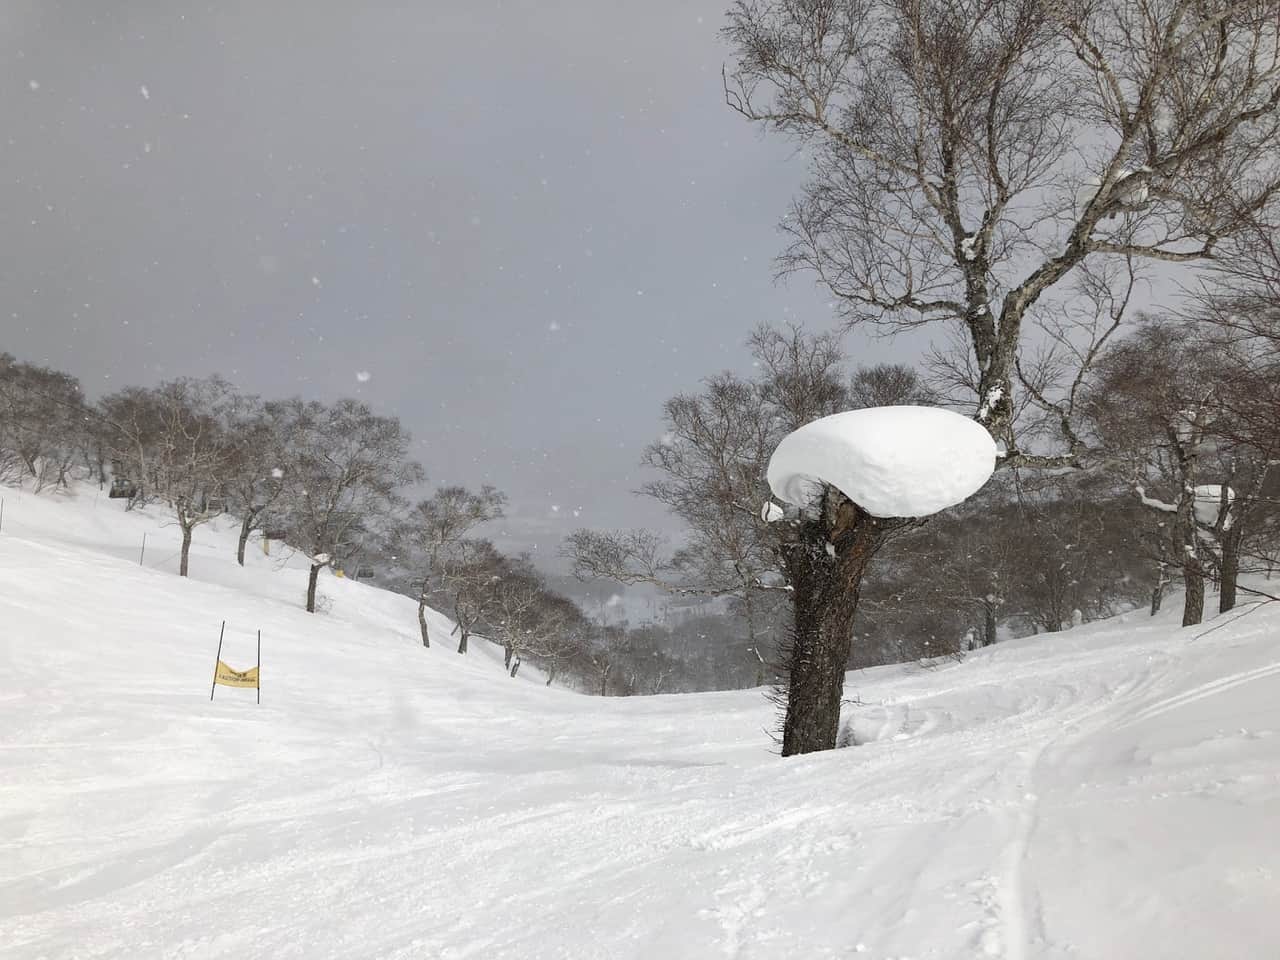 Ski slopes through the forest of Niseko's Annupuri Ski Resort imn Hokkaido